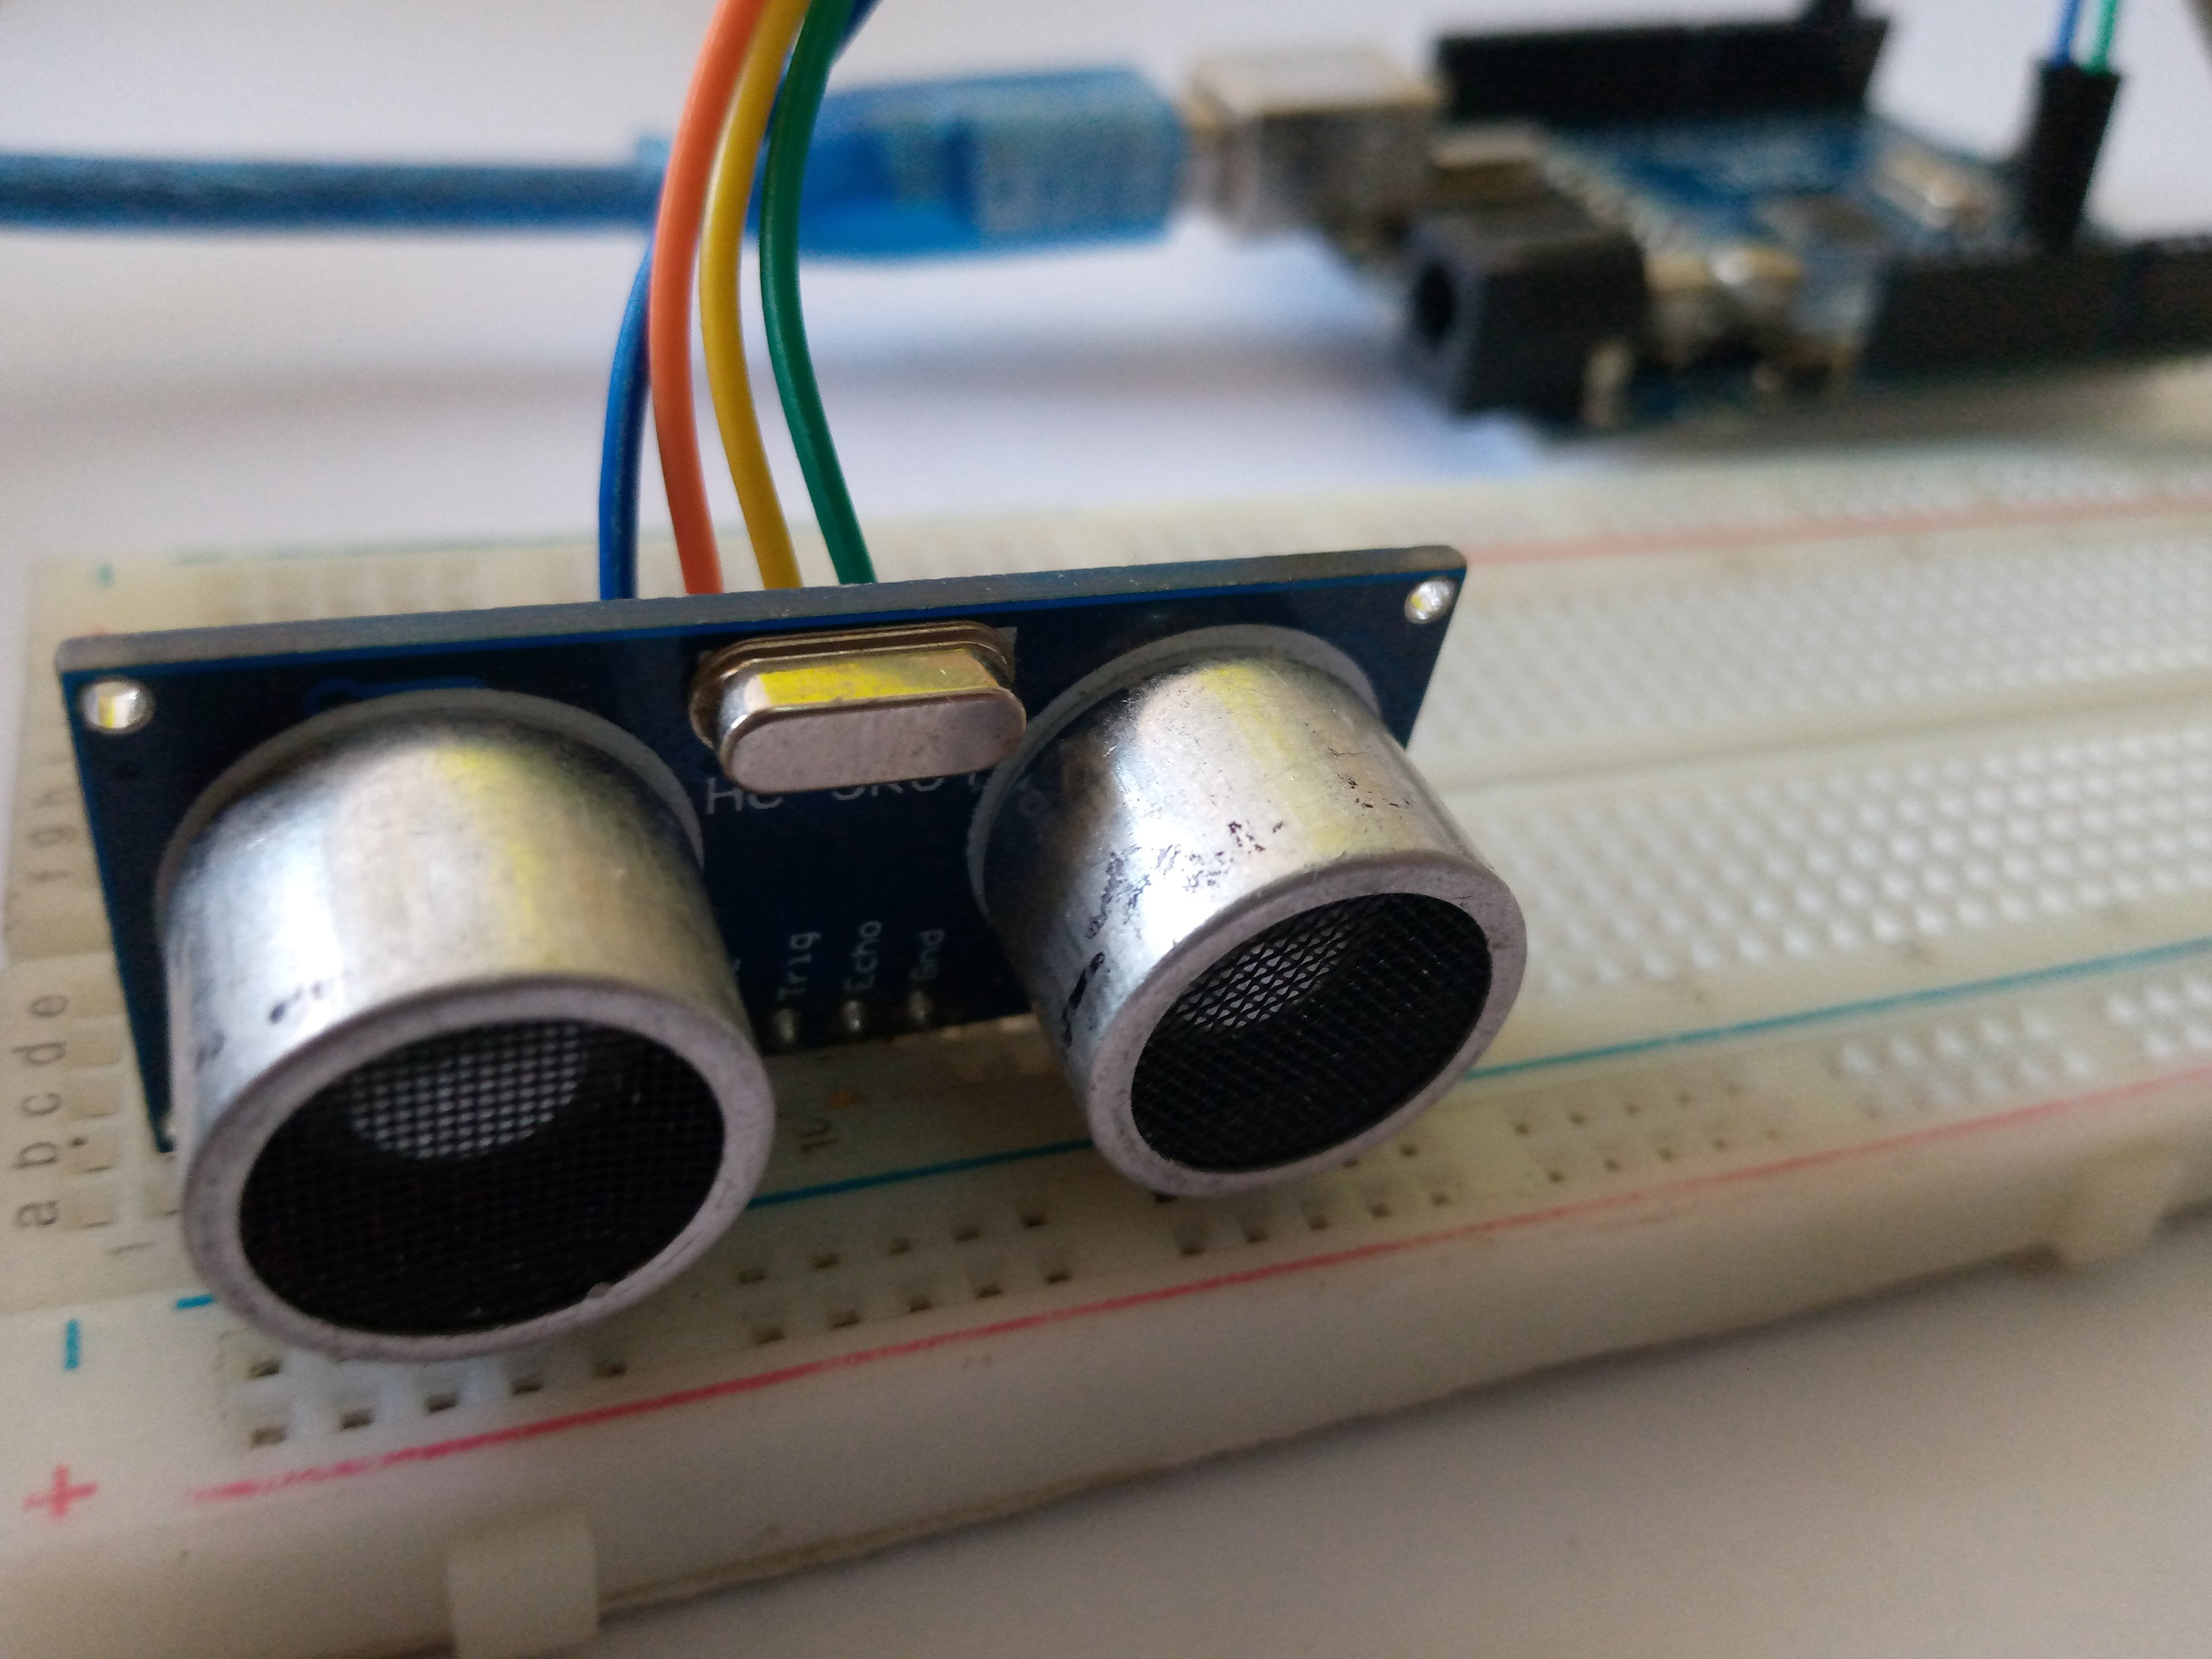 hc sr04 ultrasonic sensor arduino code